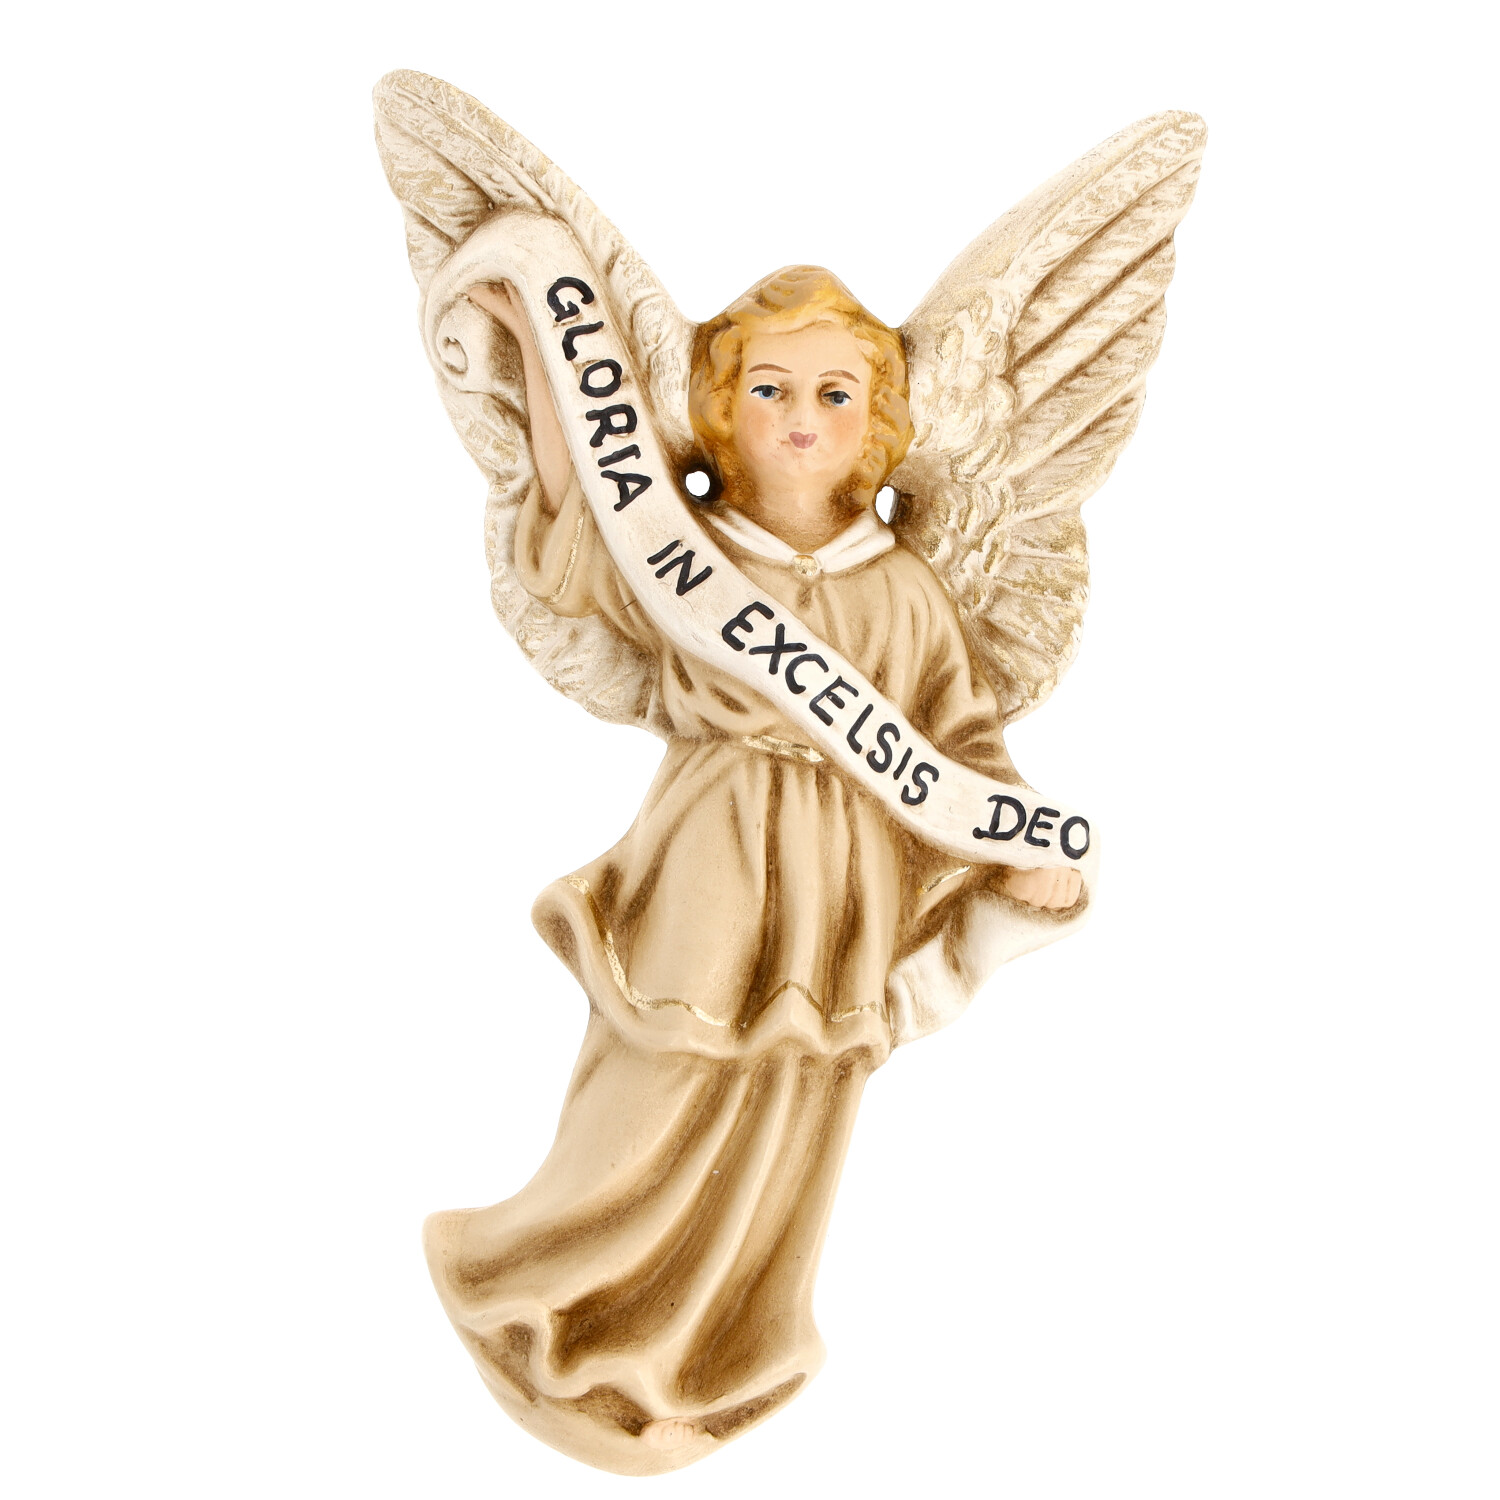 Glorai angel créme - Marolin Nativity figure - made in Germany